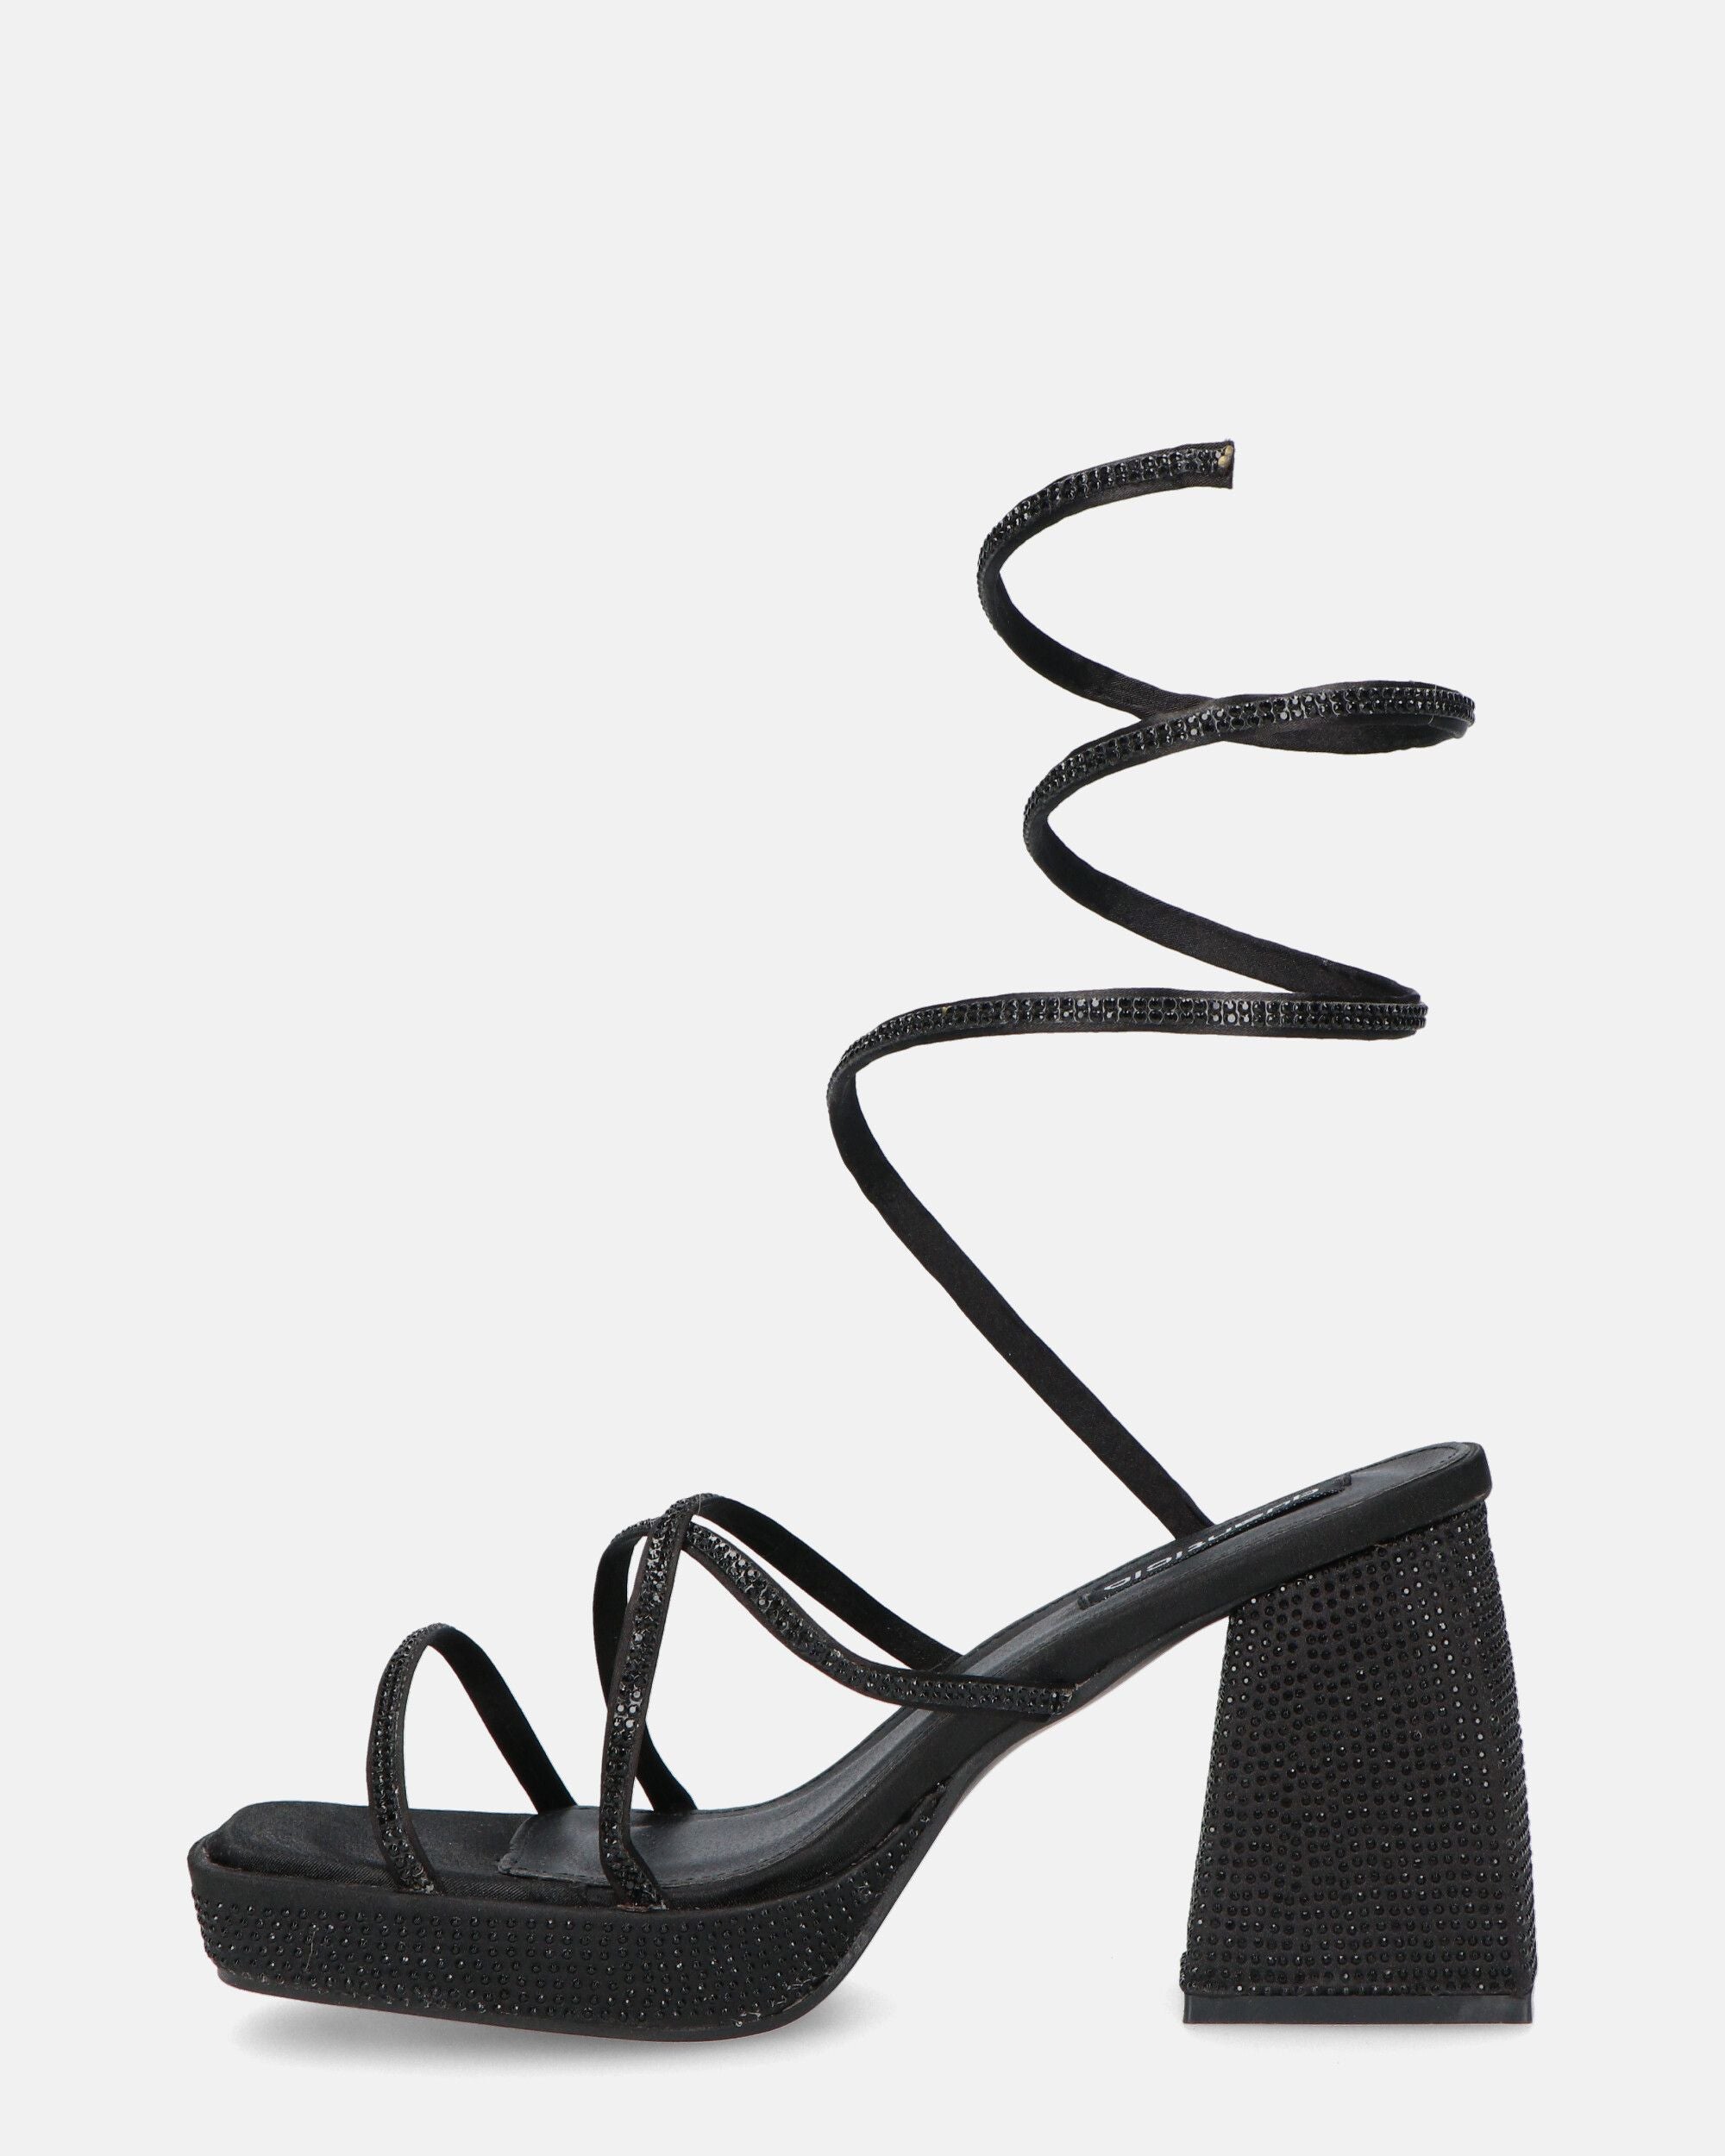 AZUKA - black sandals with heel and spiral